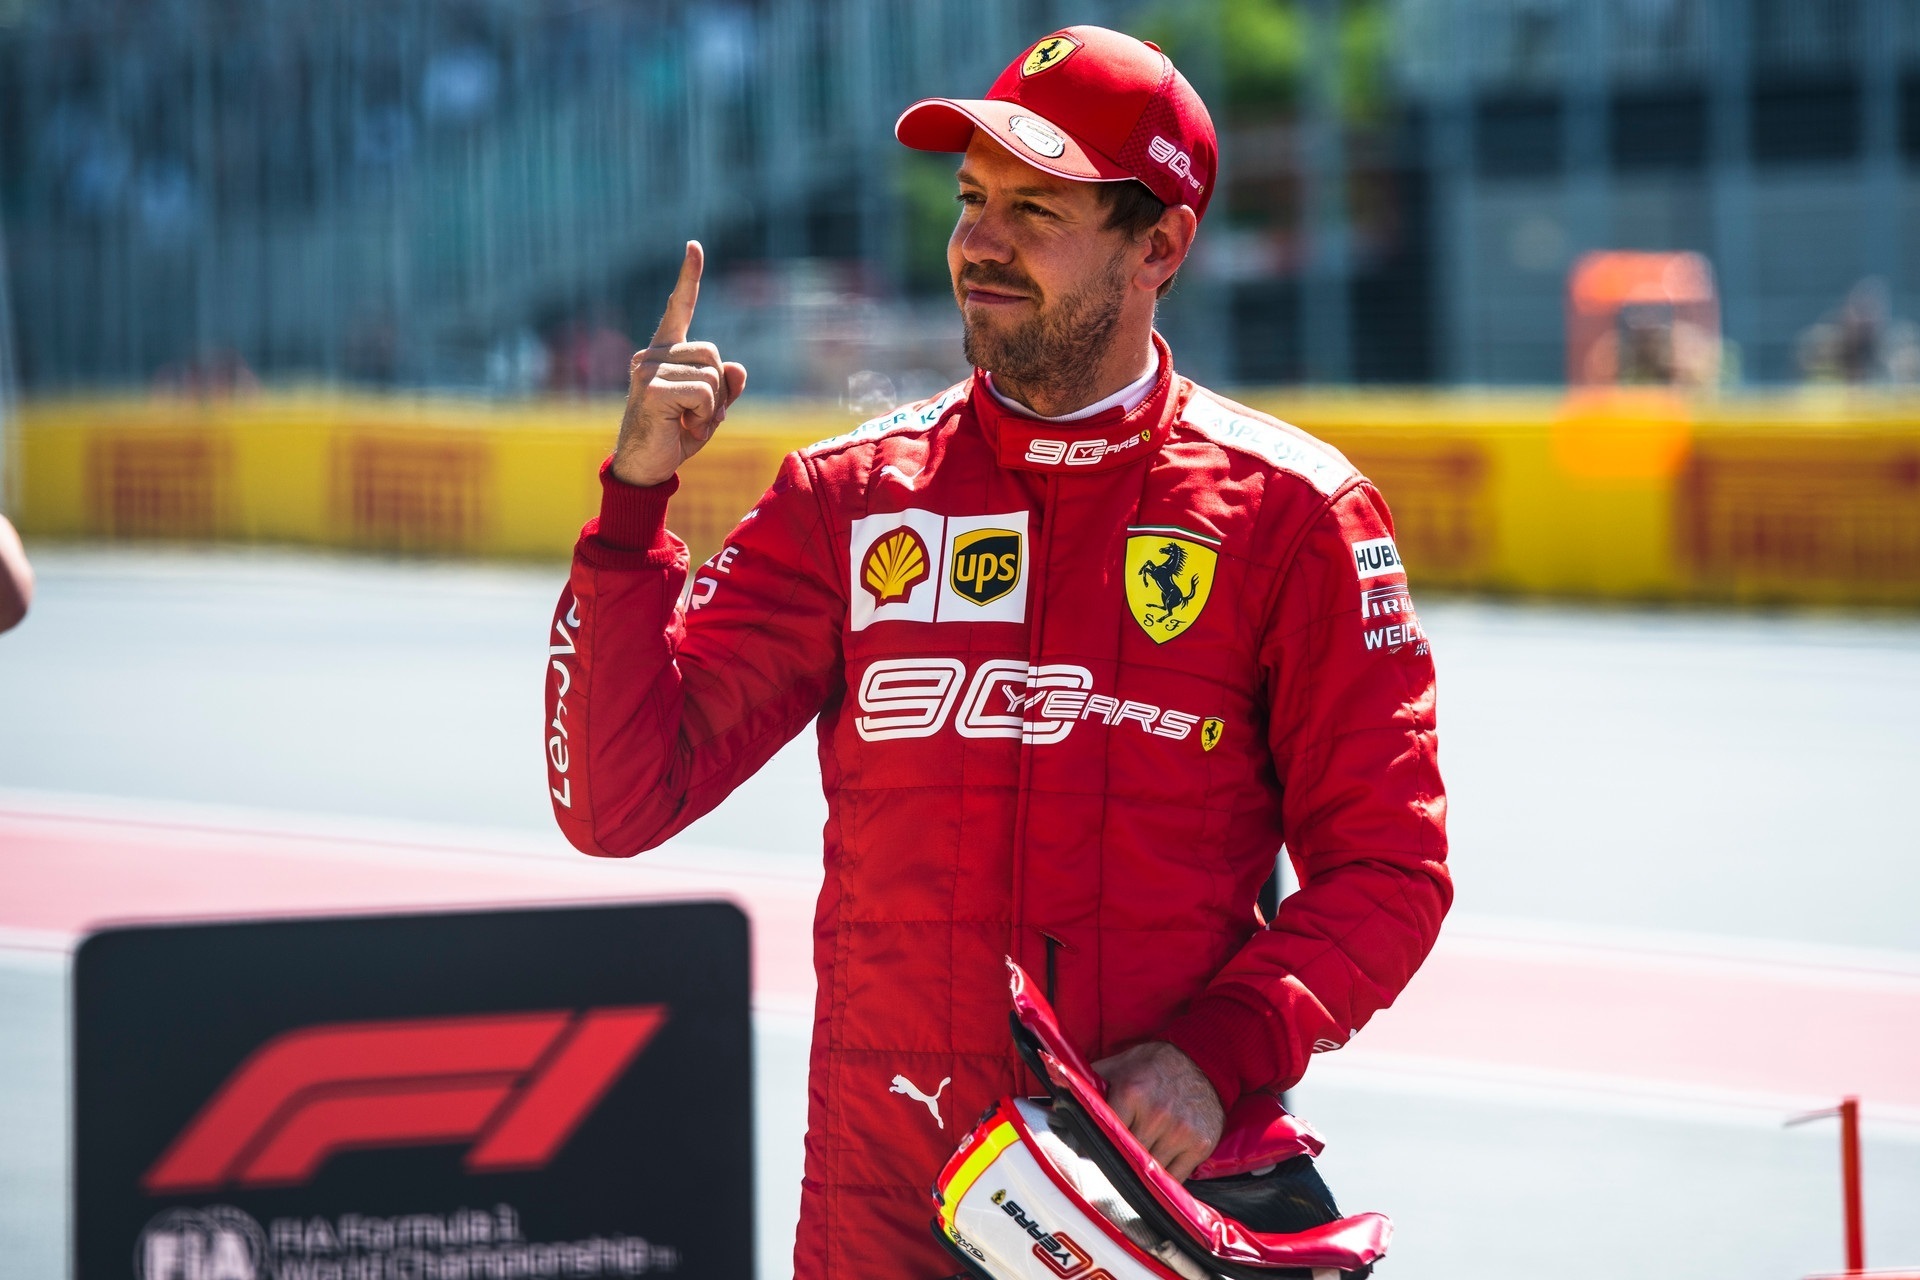 f1chronicle-2019 Canadian Grand Prix, Saturday - Sebastian Vettel